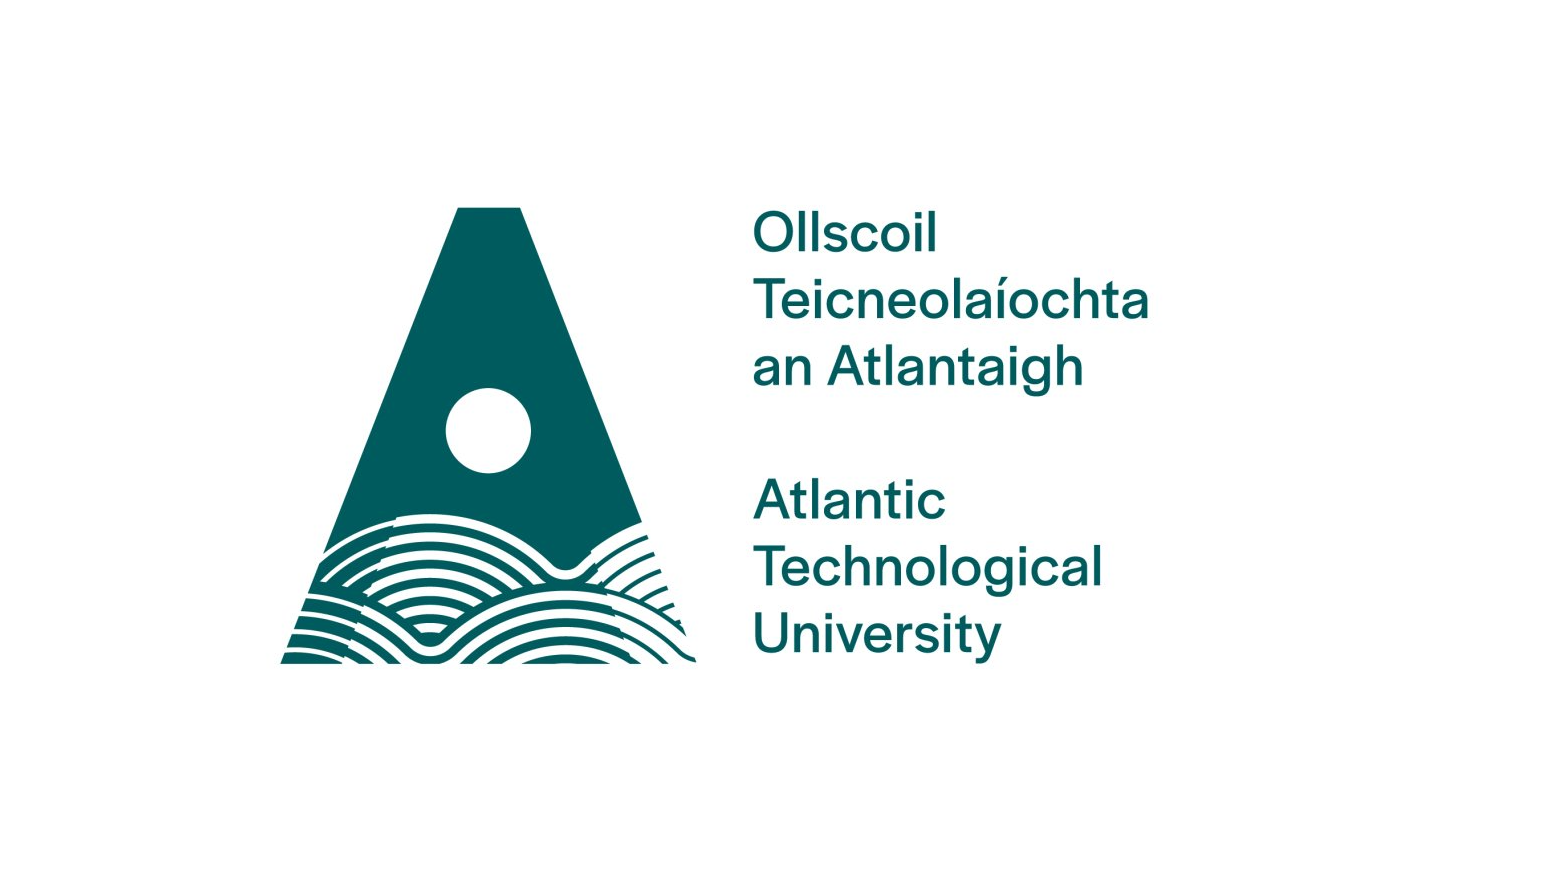 Atlantic Technological University: Galway City